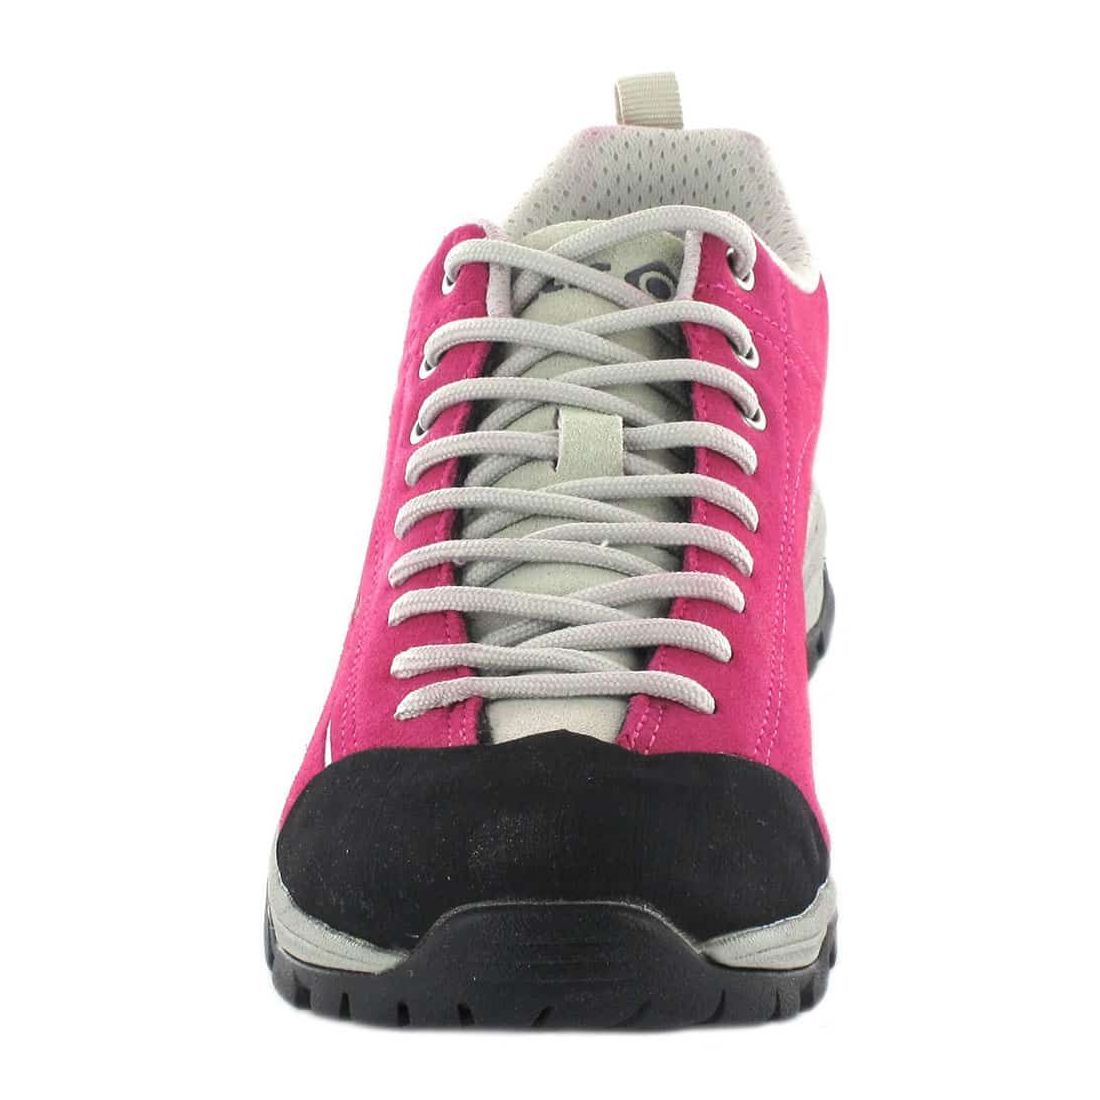 Izas Zorge Pink - Running Shoes Trekking Woman